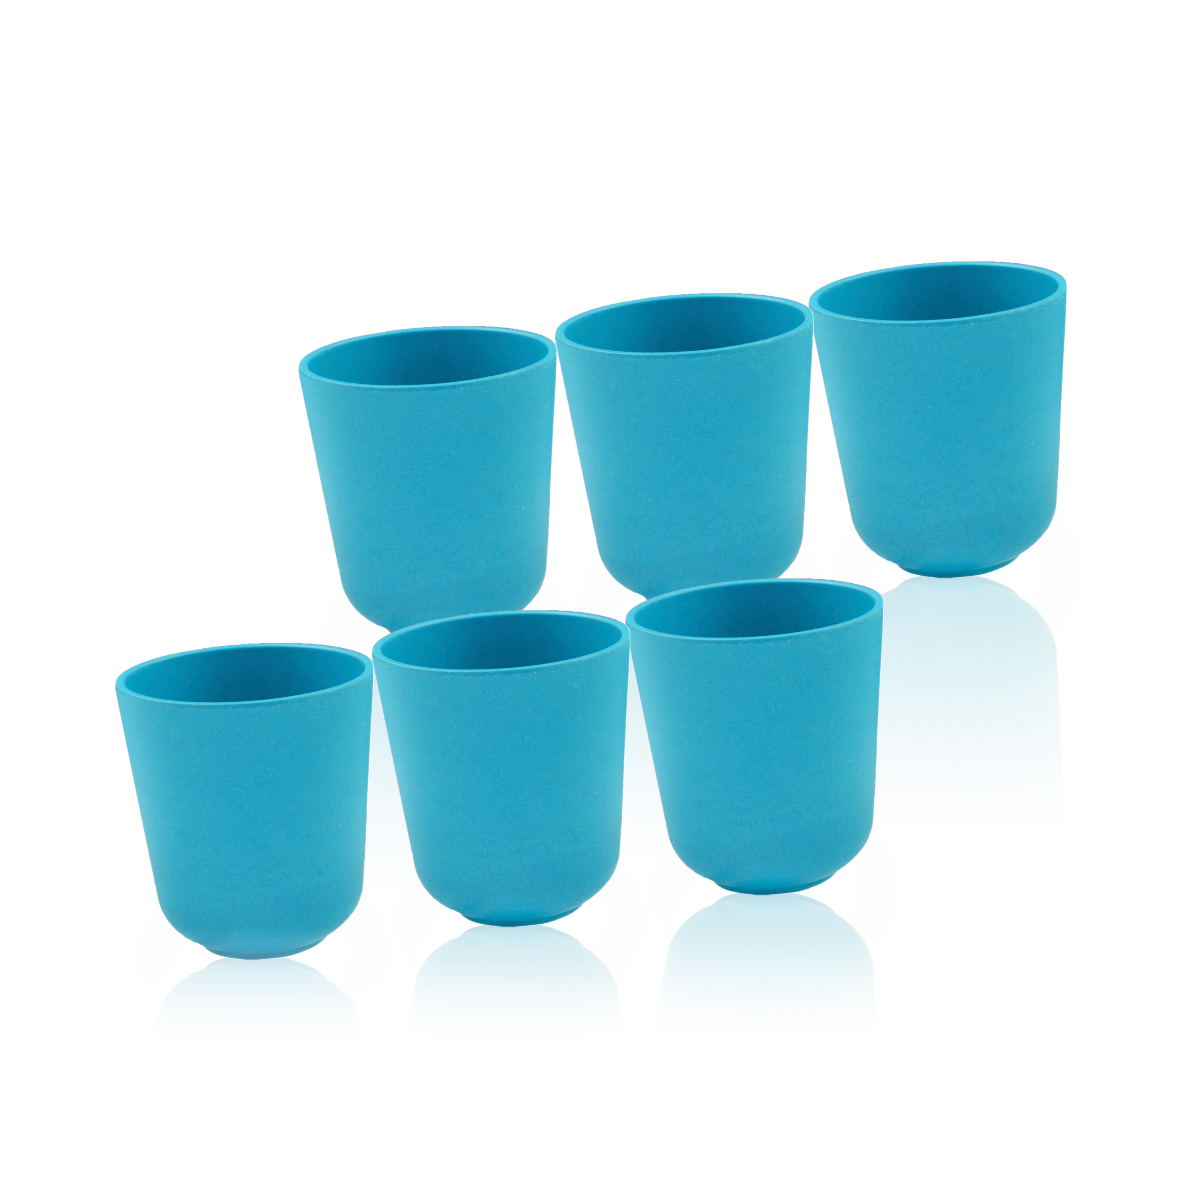 Cup Set - 6 pieces